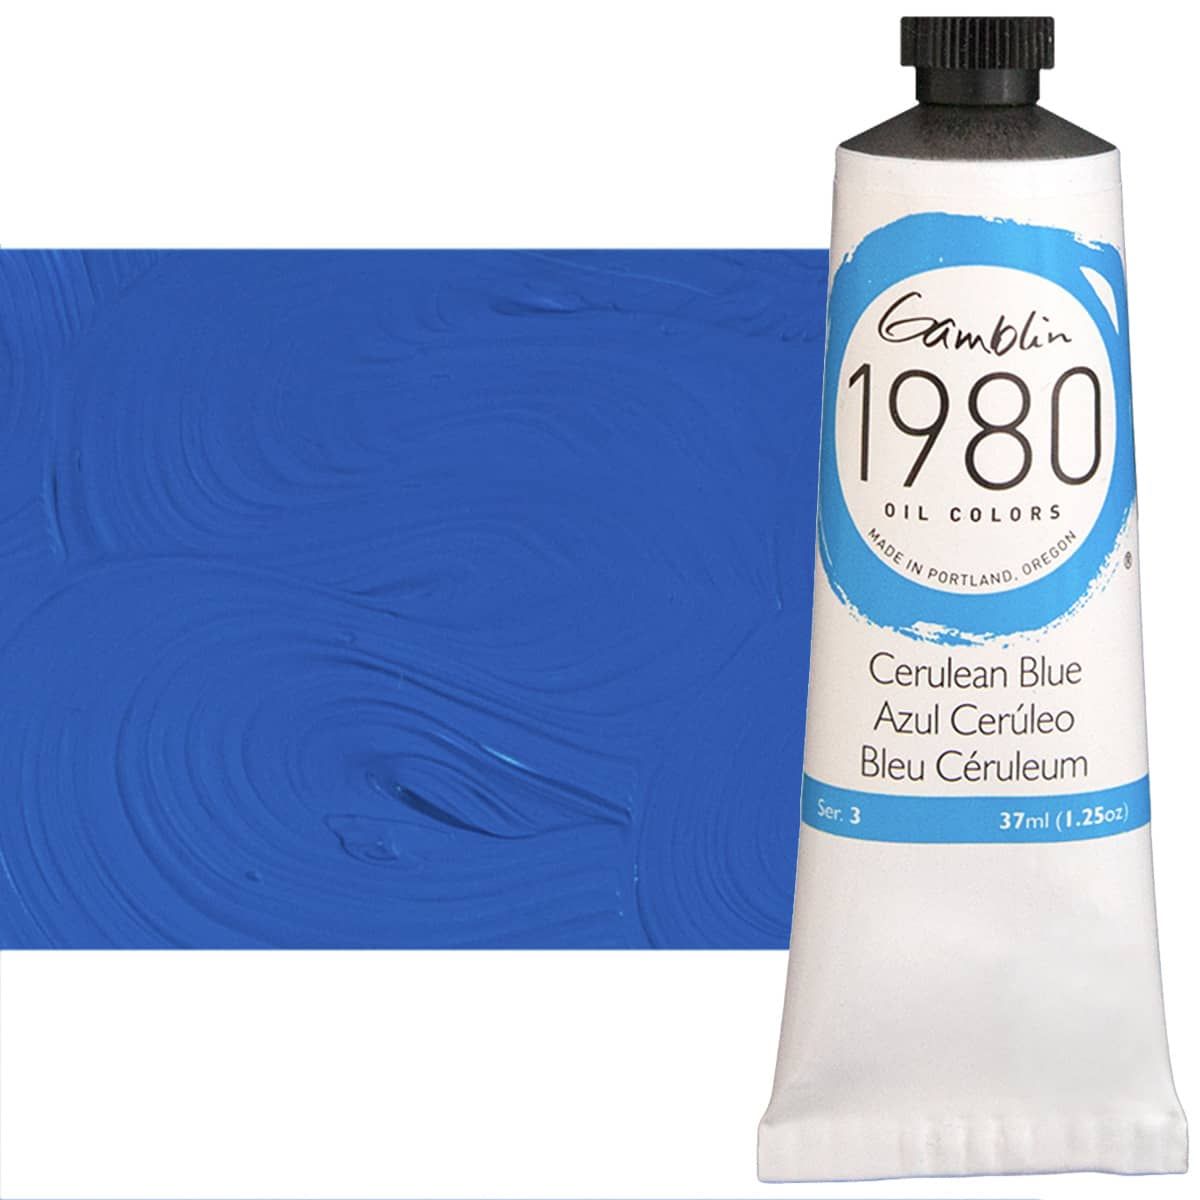 Gamblin 1980 Oil Colors - Cerulean Blue, 37ml Tube